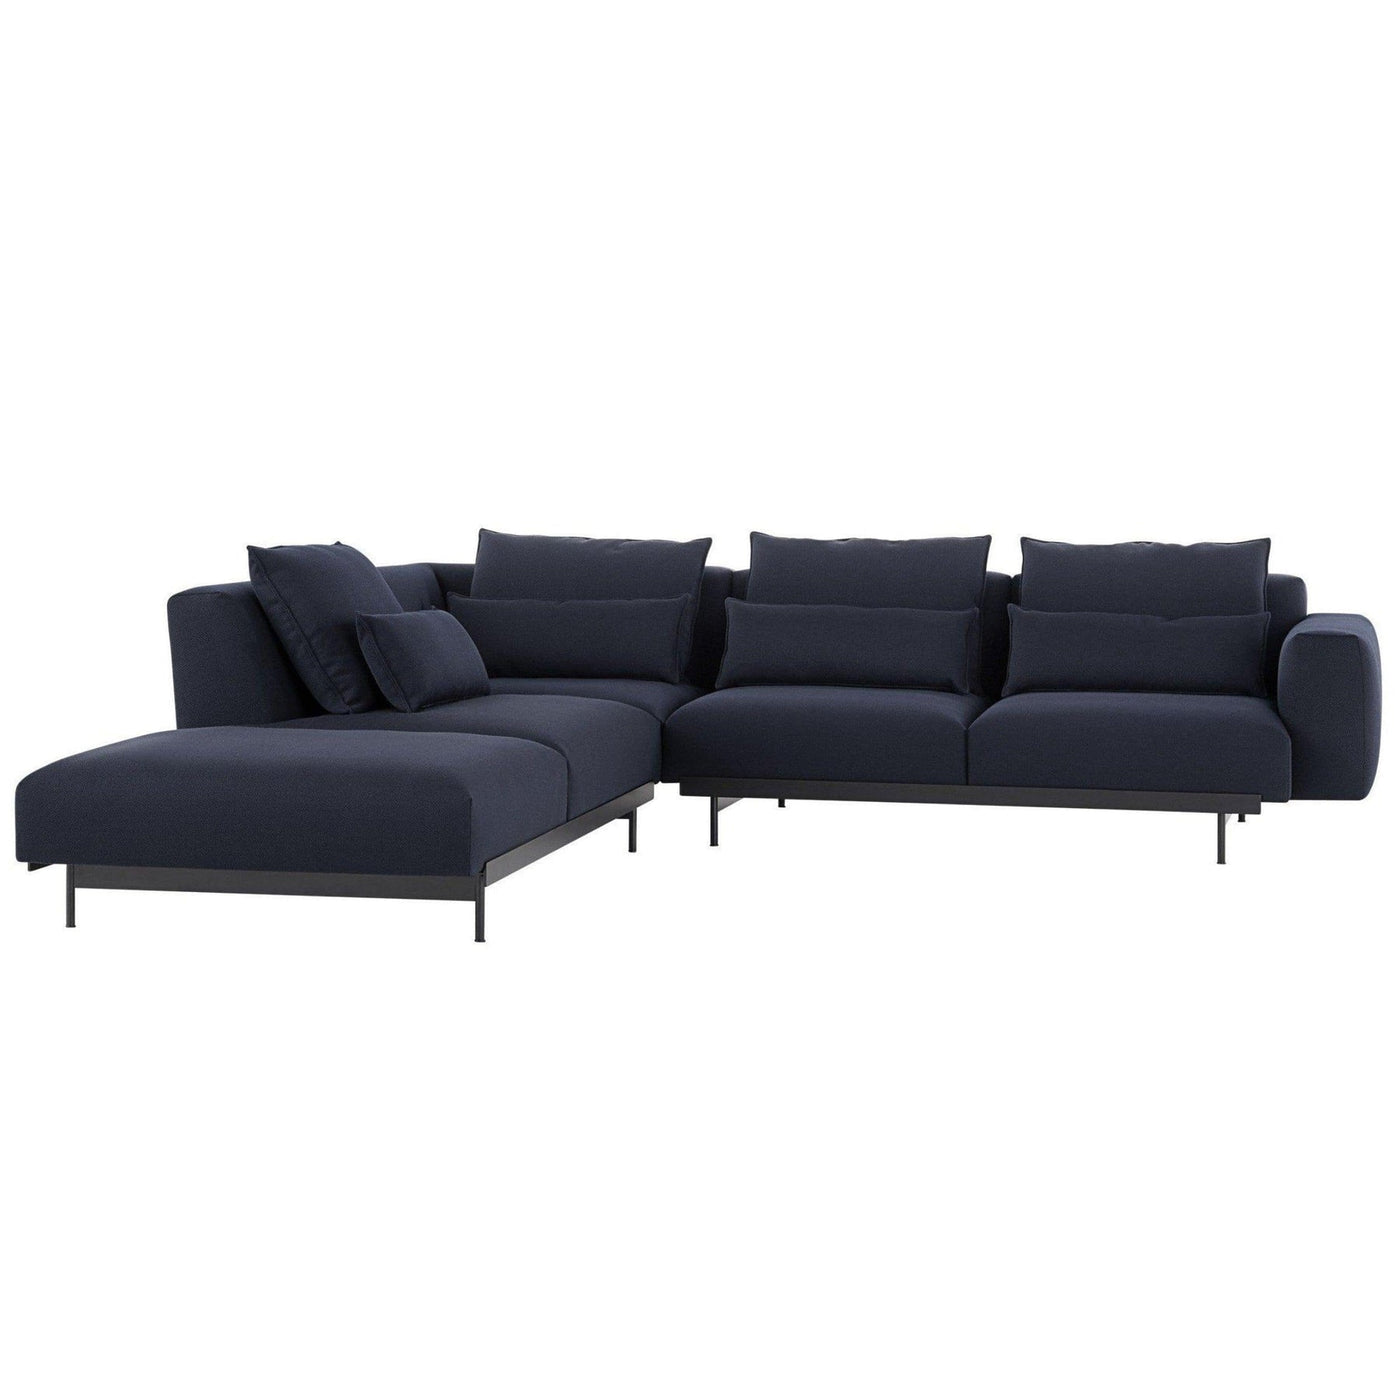 Muuto In Situ corner sofa, configuration 2 in vidar 554 fabric. Made to order from someday designs. #colour_vidar-554